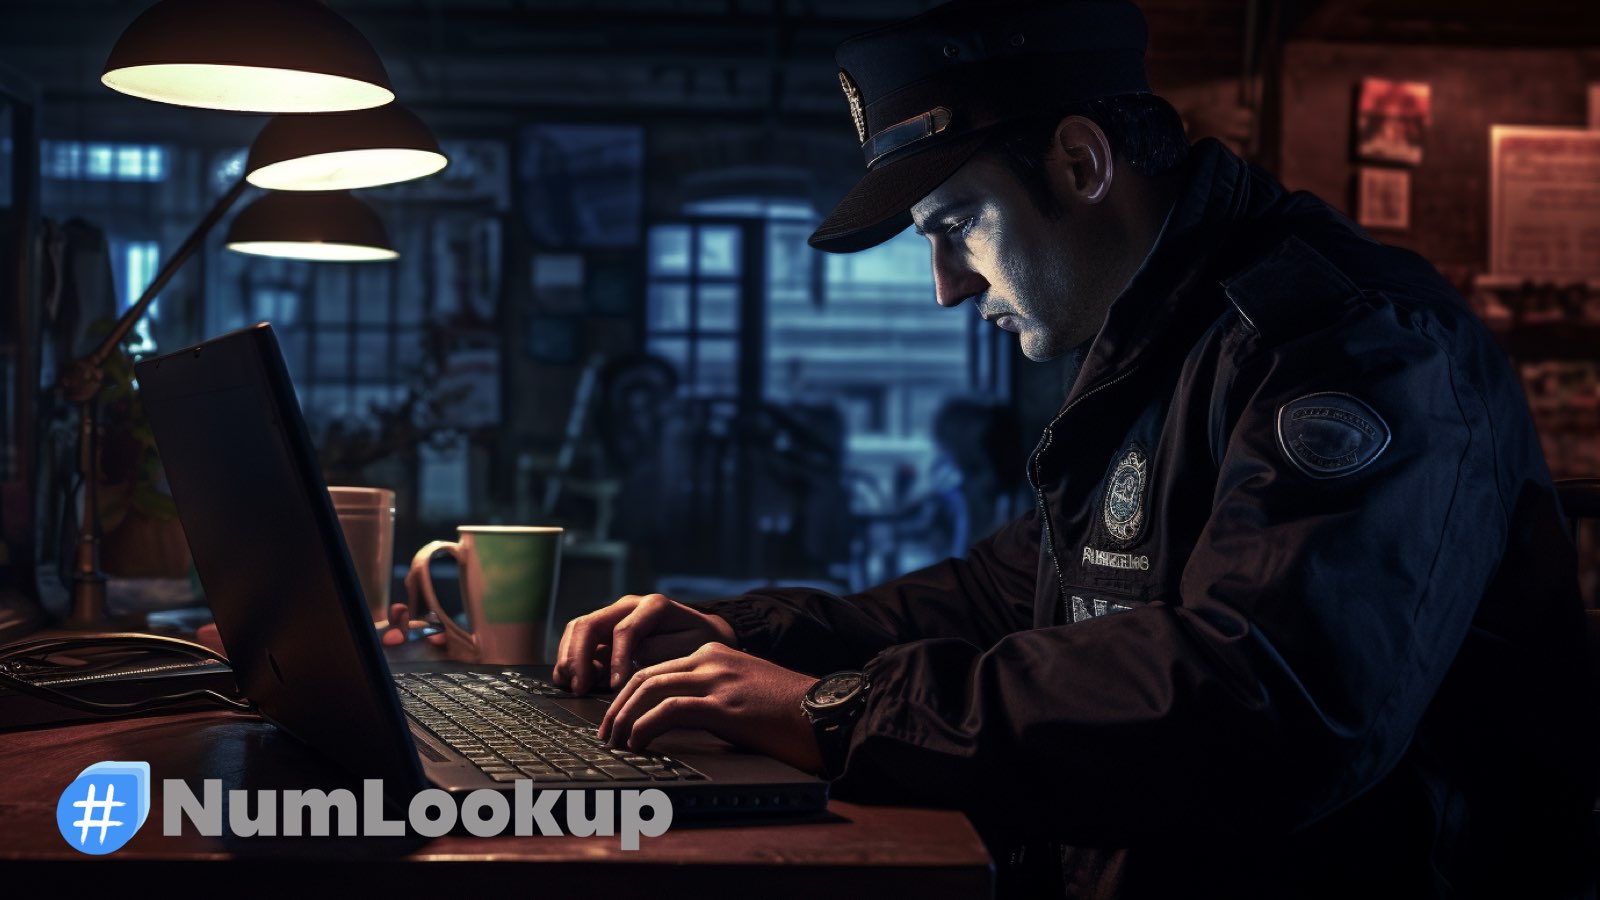 Police using NumLookup